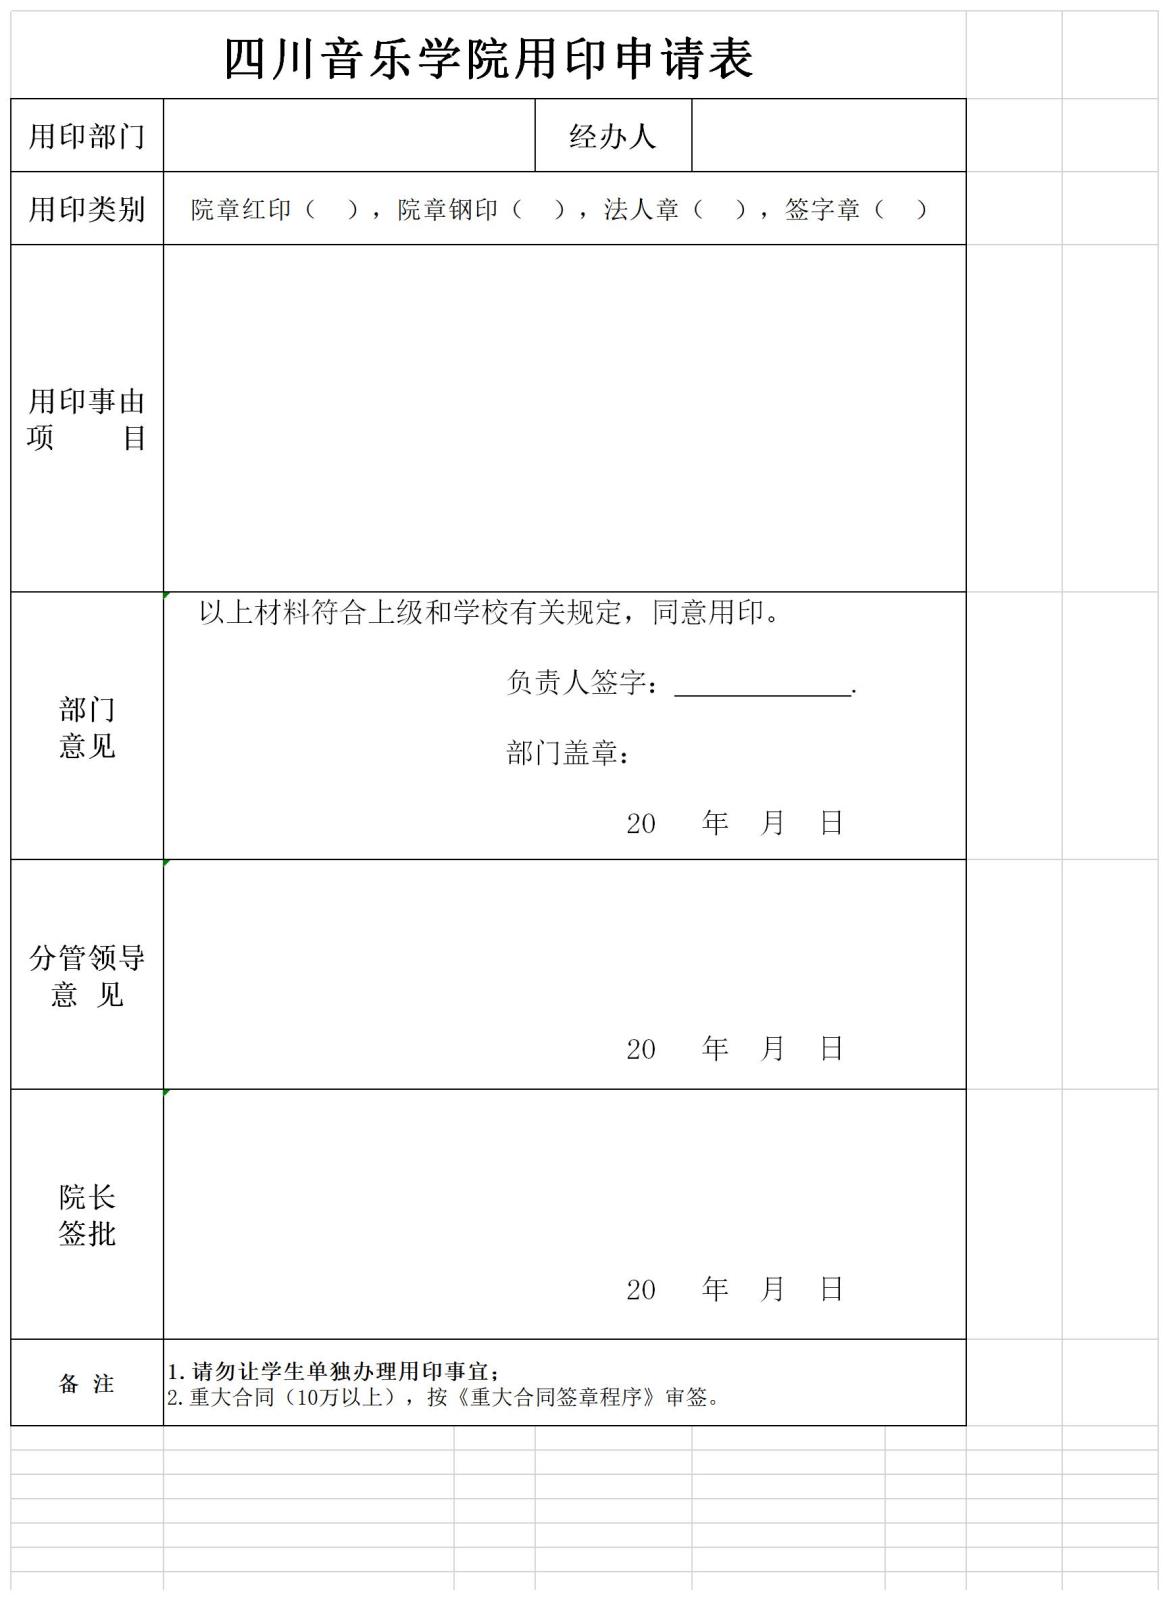 bat365中文官方网站用印申请表.jpg